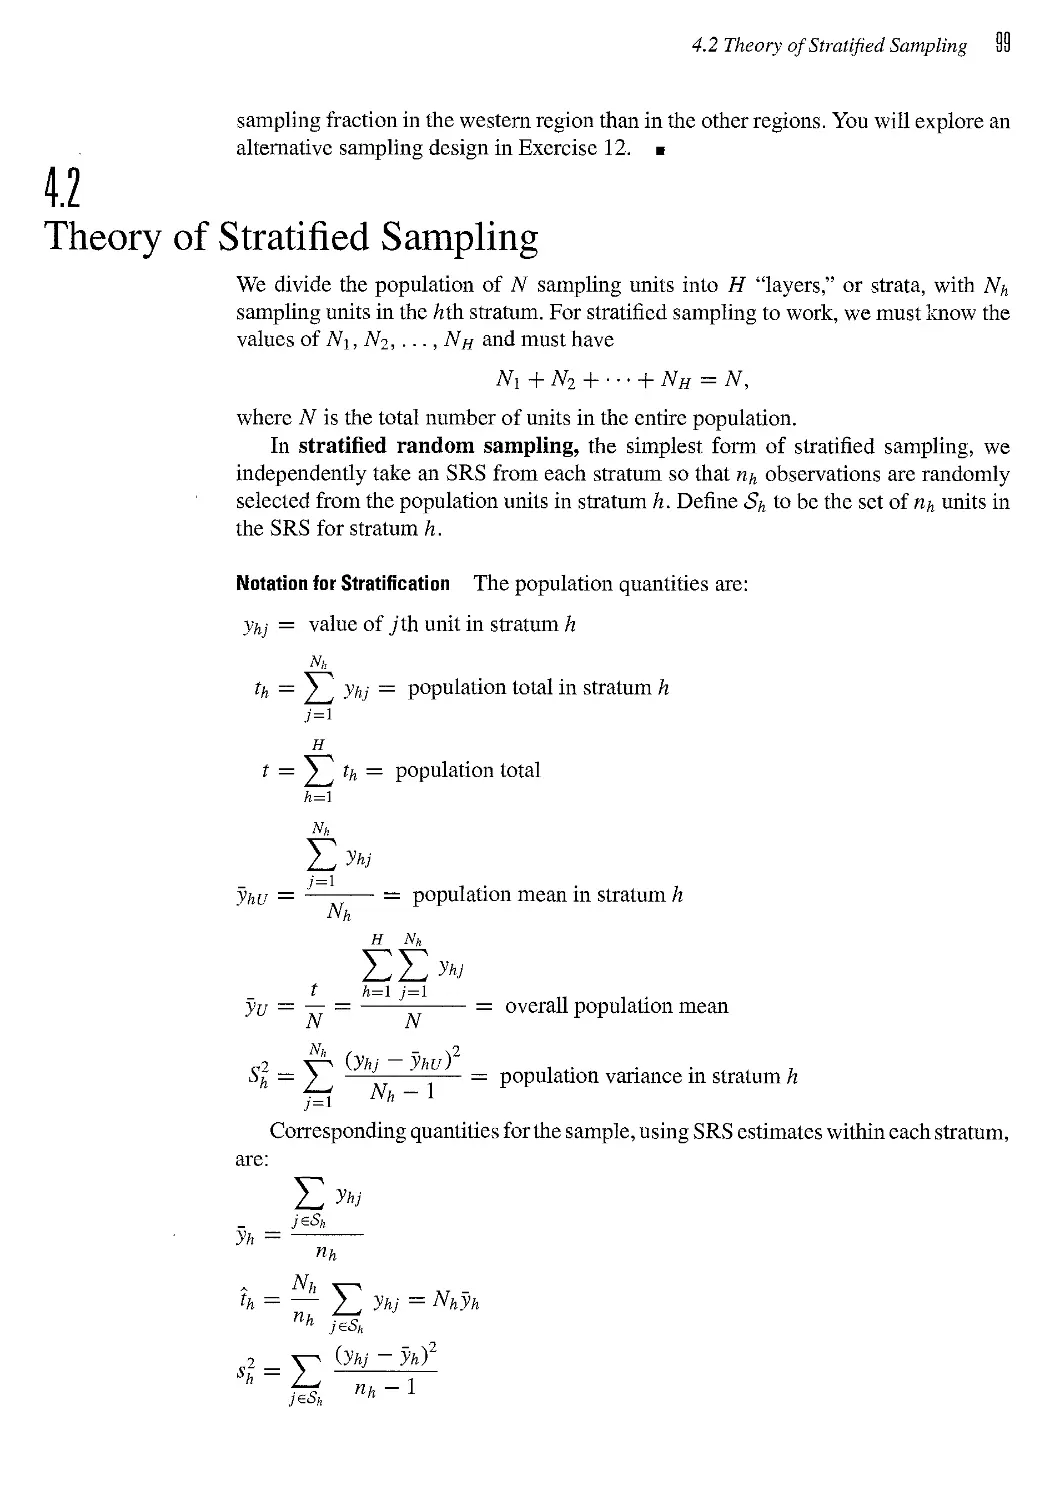 4.2 Theory of Stratified Sampling